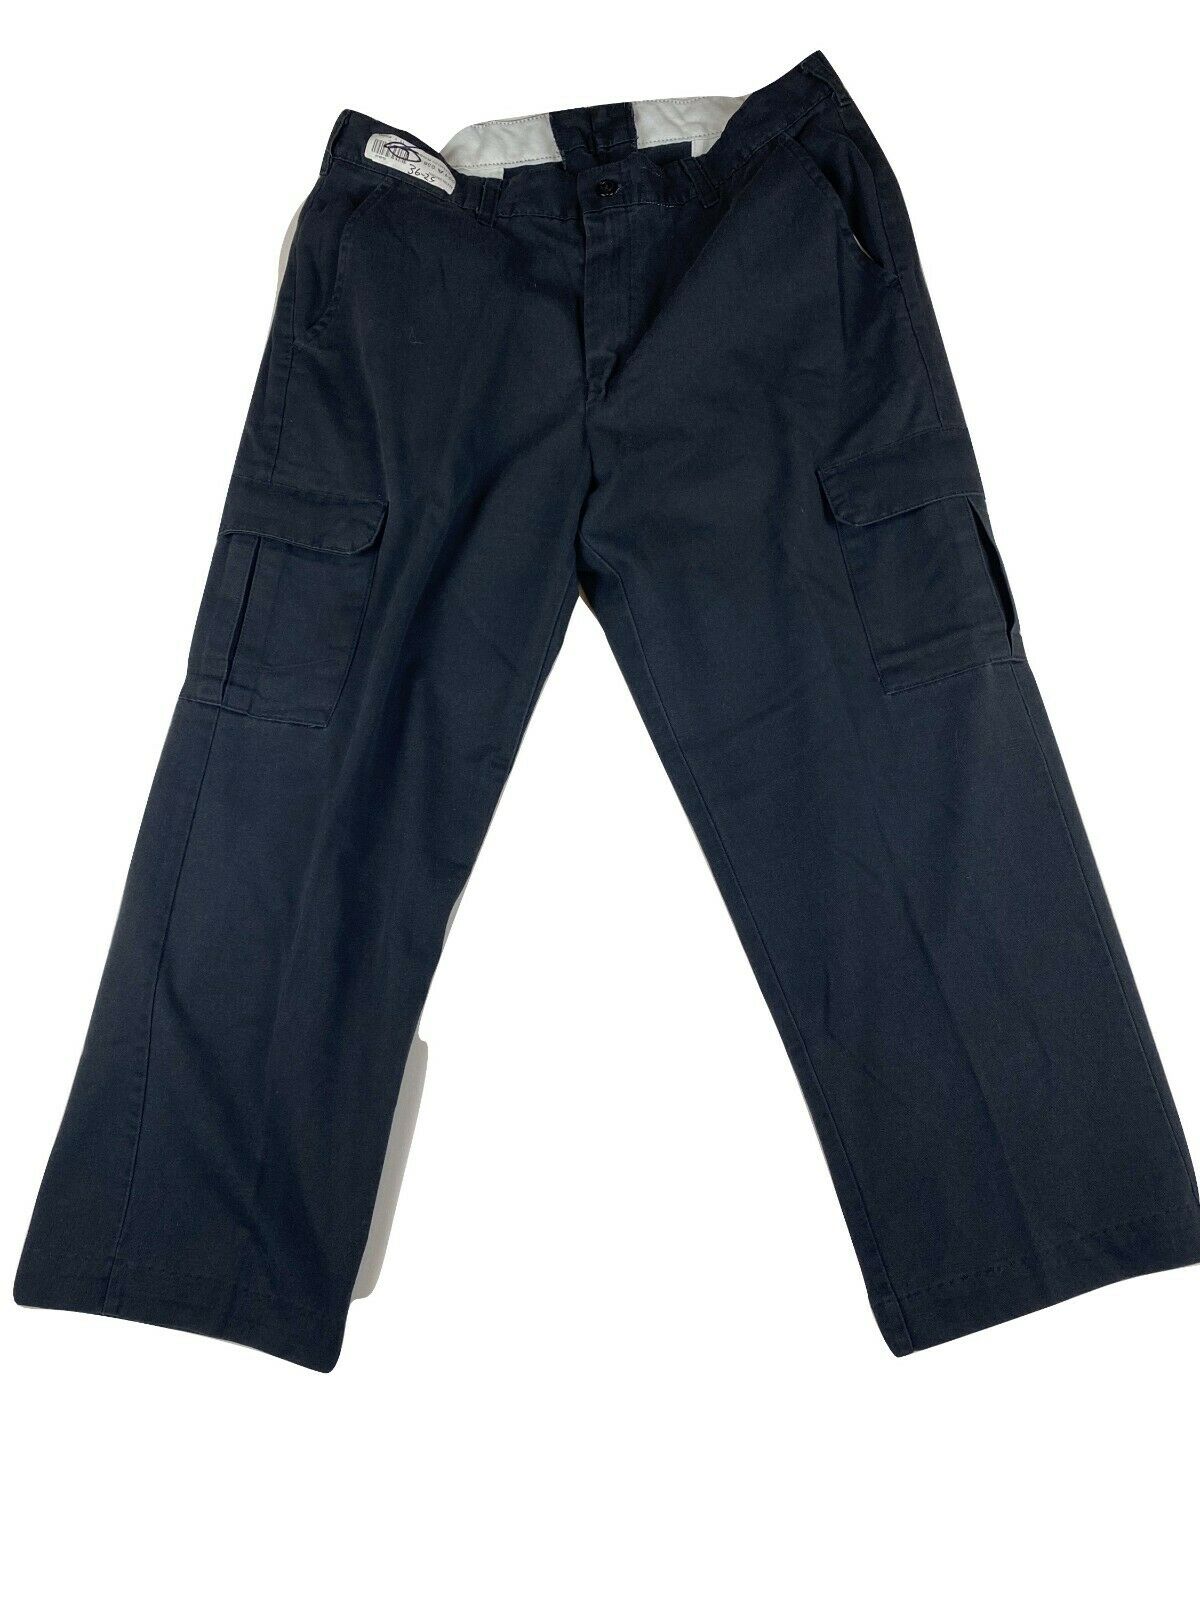 Navy Blue Cargo Pants - Red Kap, Cintas, Unifirst Dickies Etc- Used Work Uniform